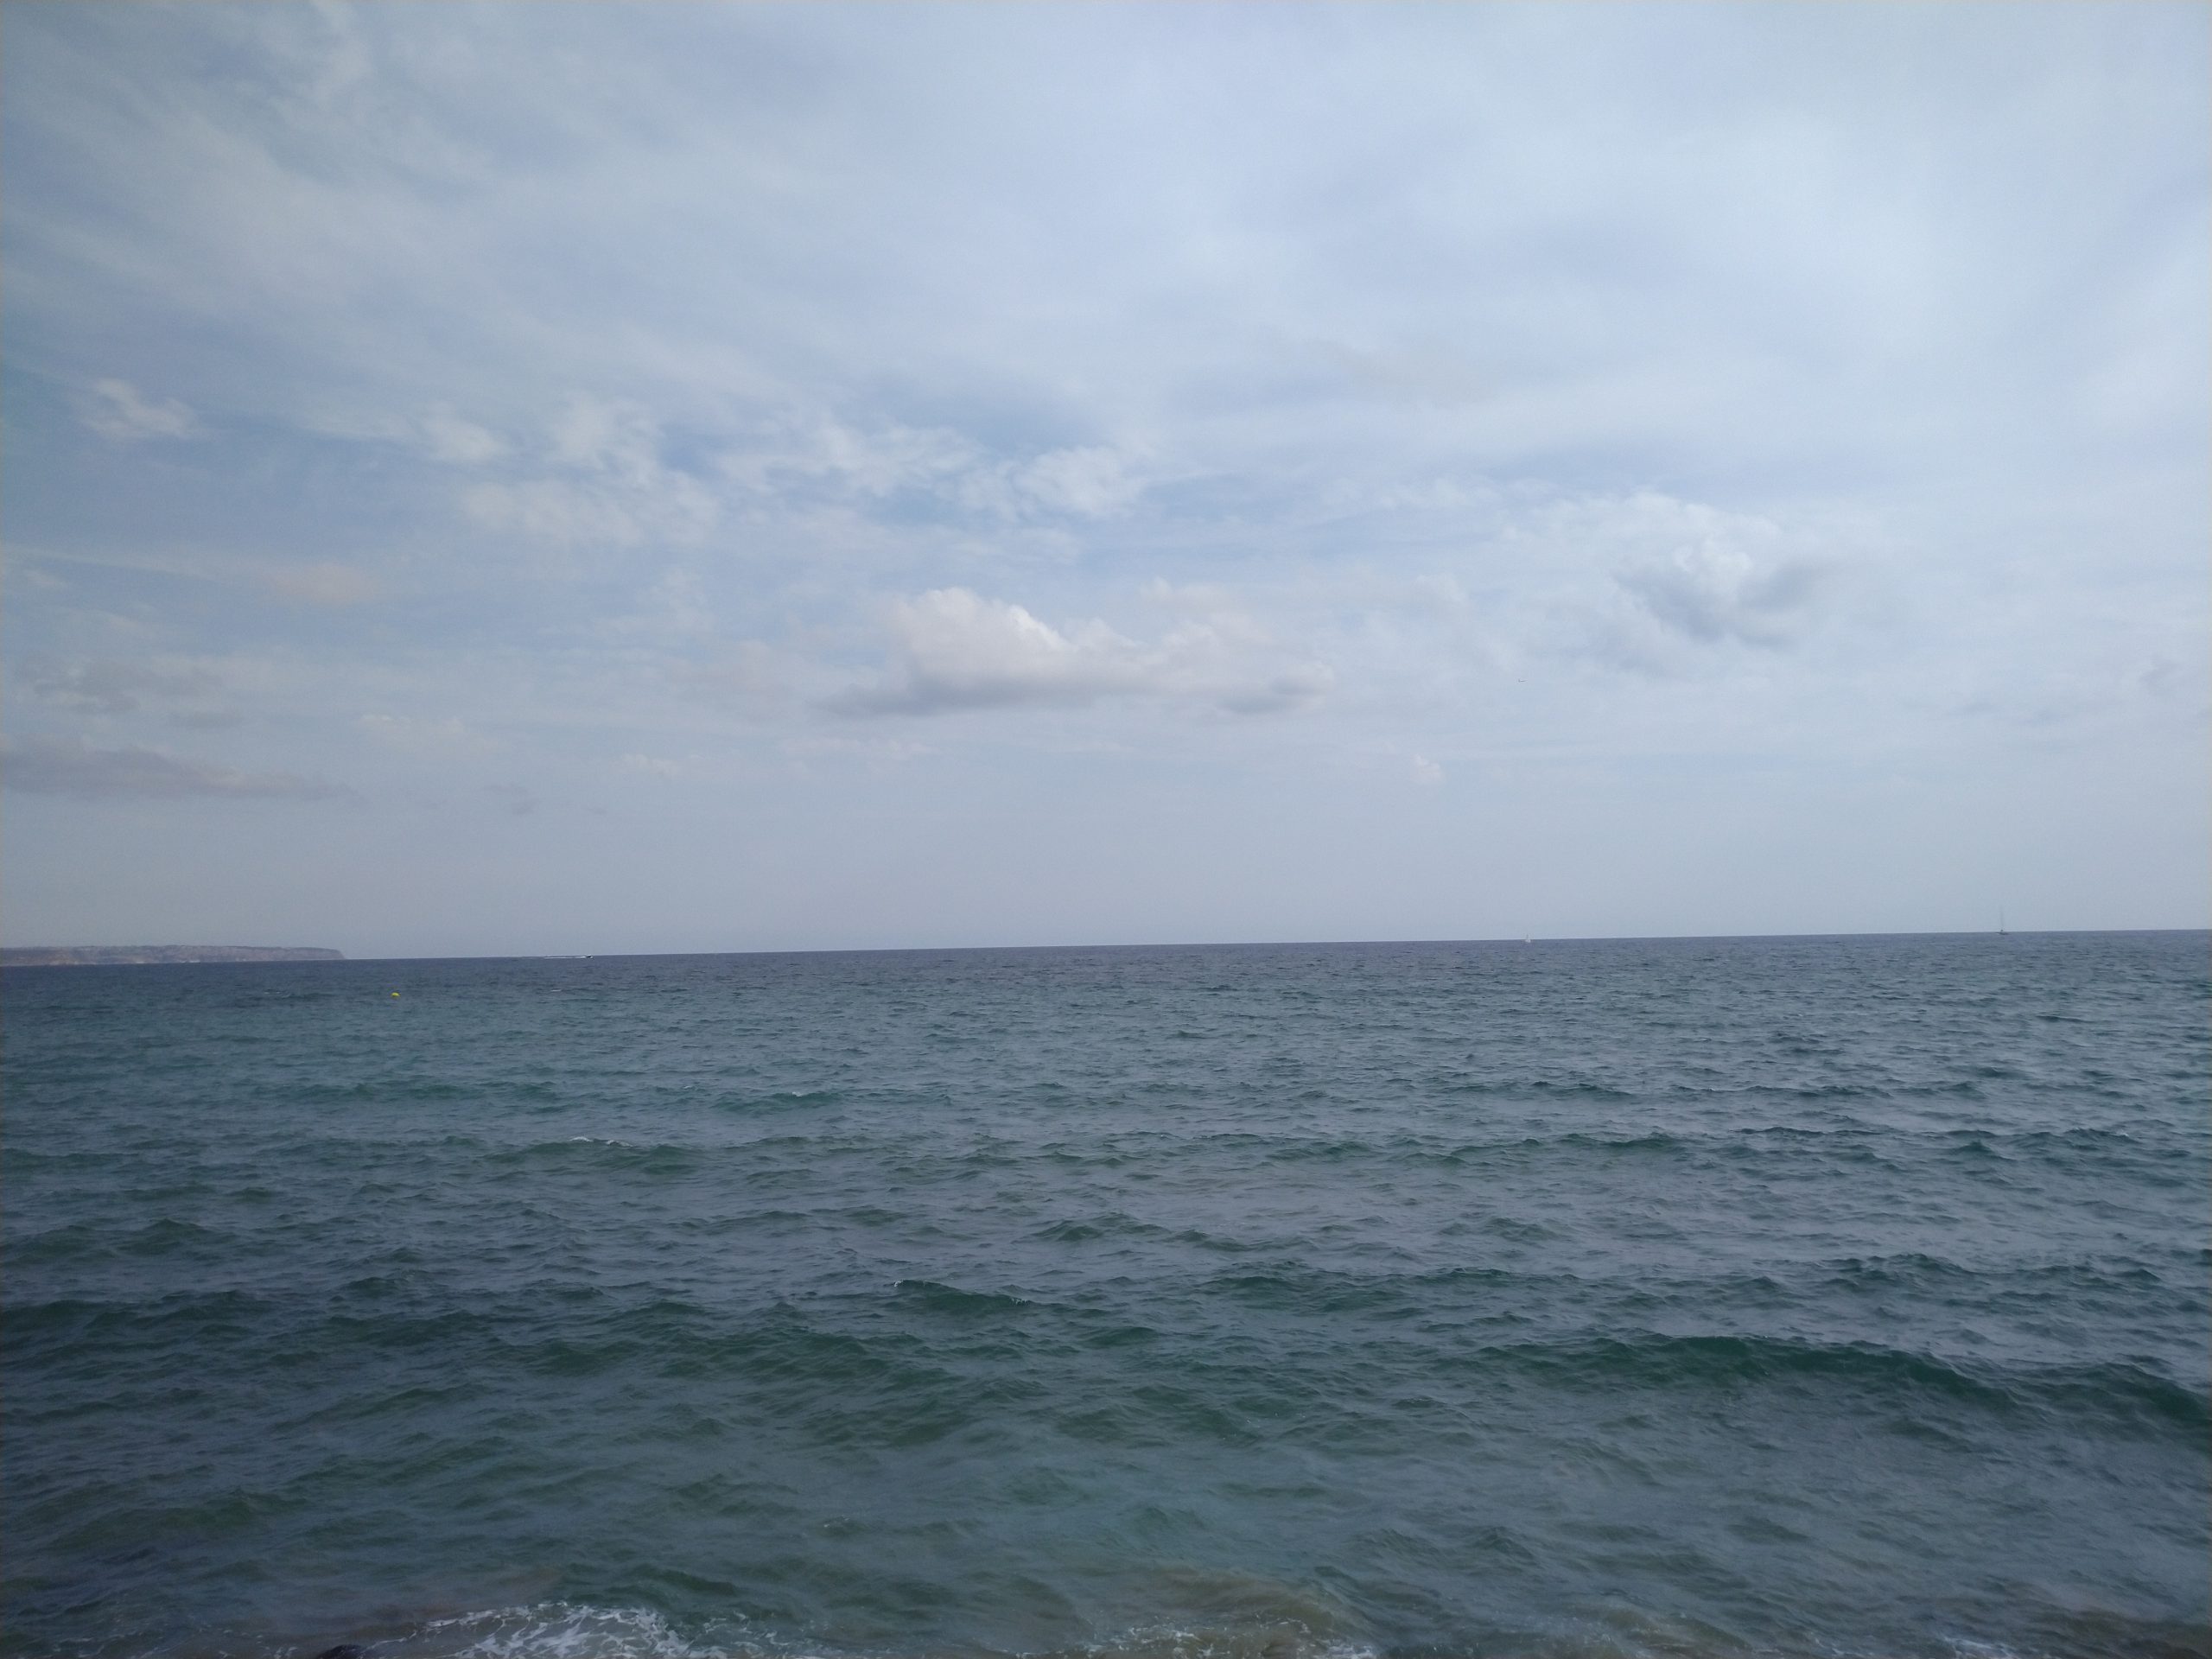 The sea